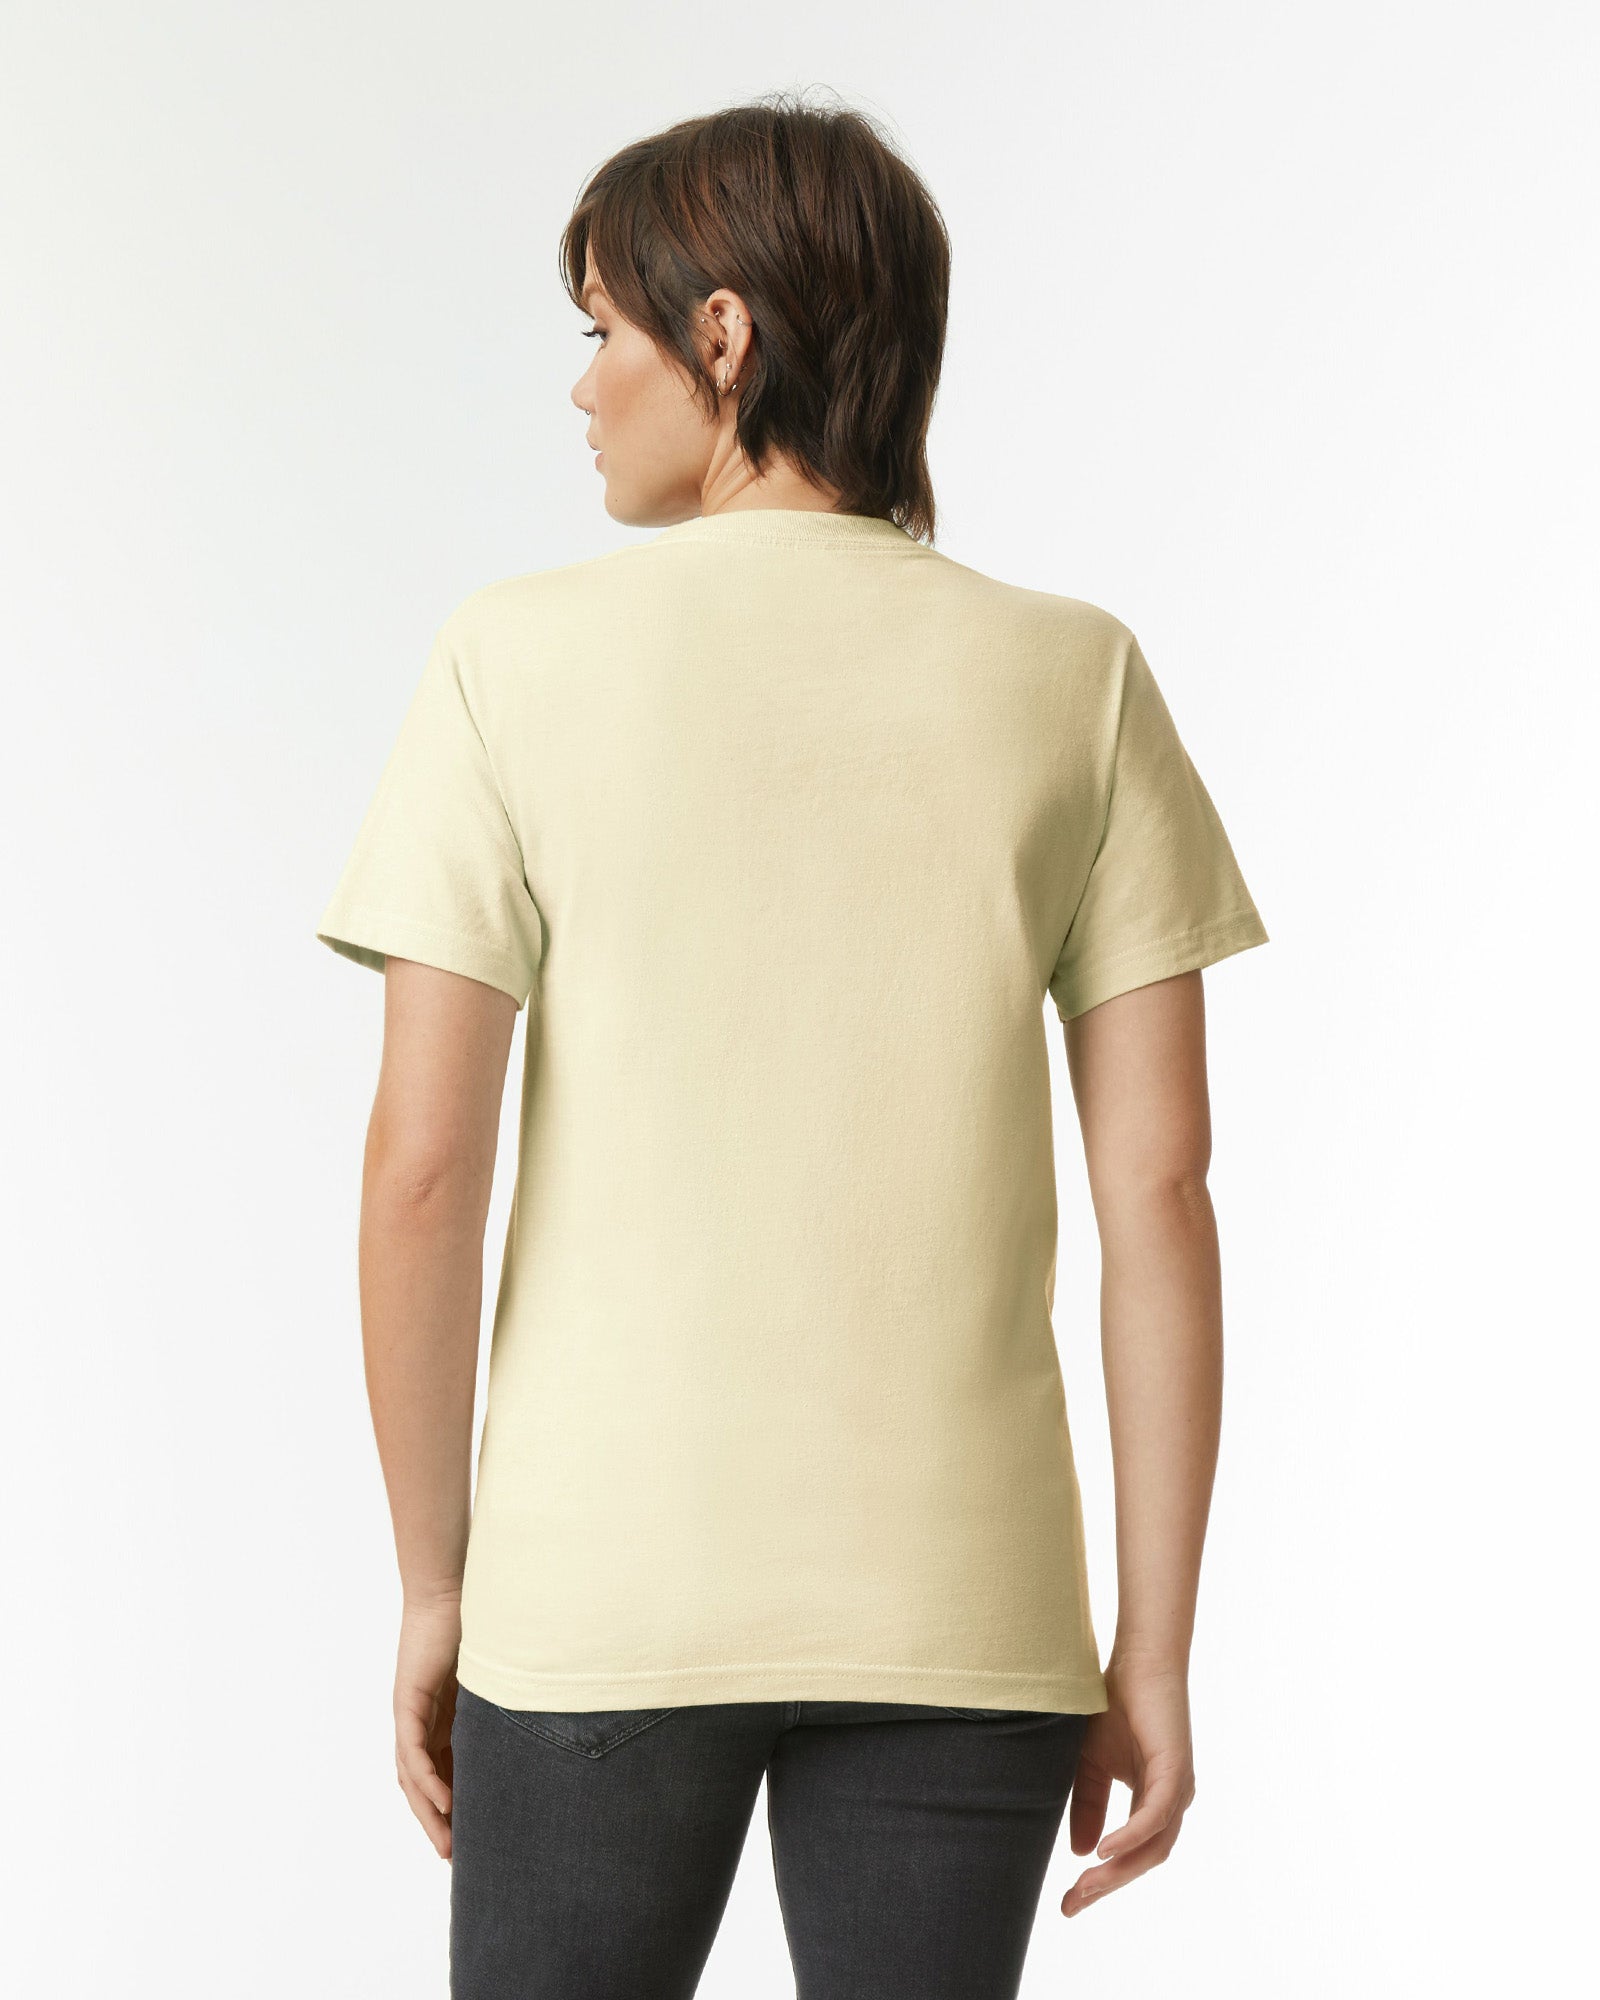 Heavyweight Unisex T-Shirt - Cream